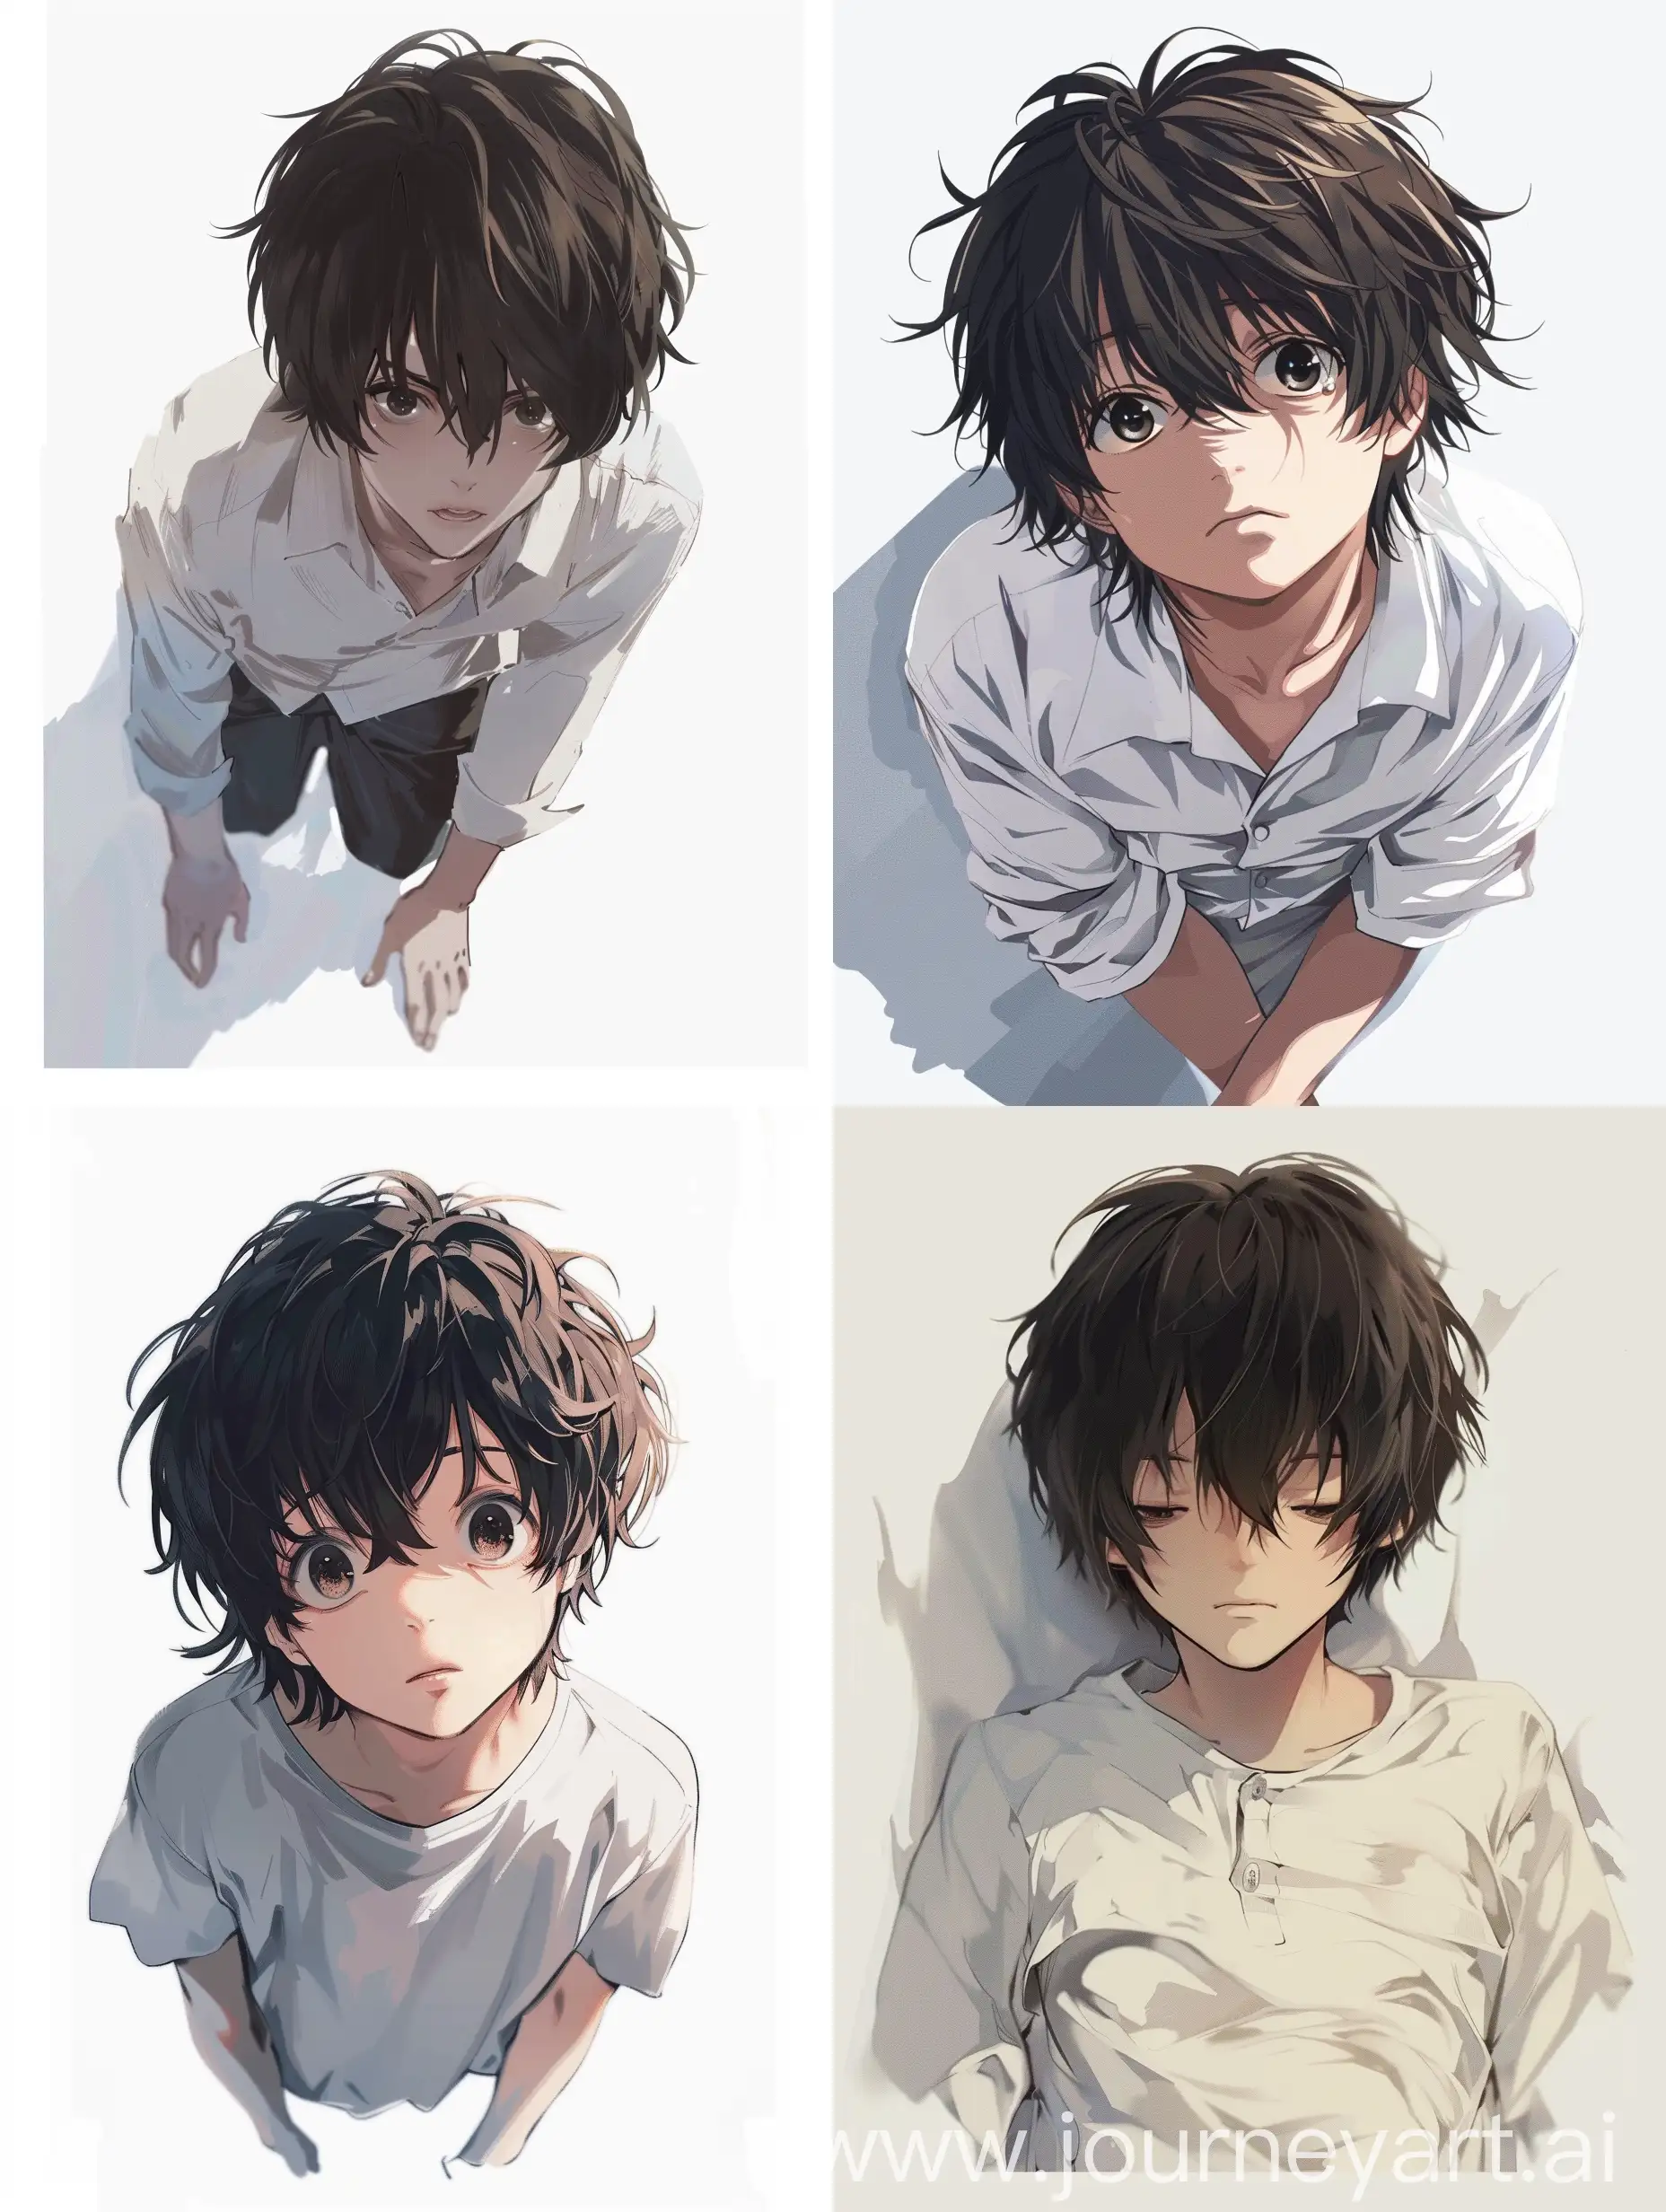 boy, dark hair, white shirt, top view at an angle, anime style.